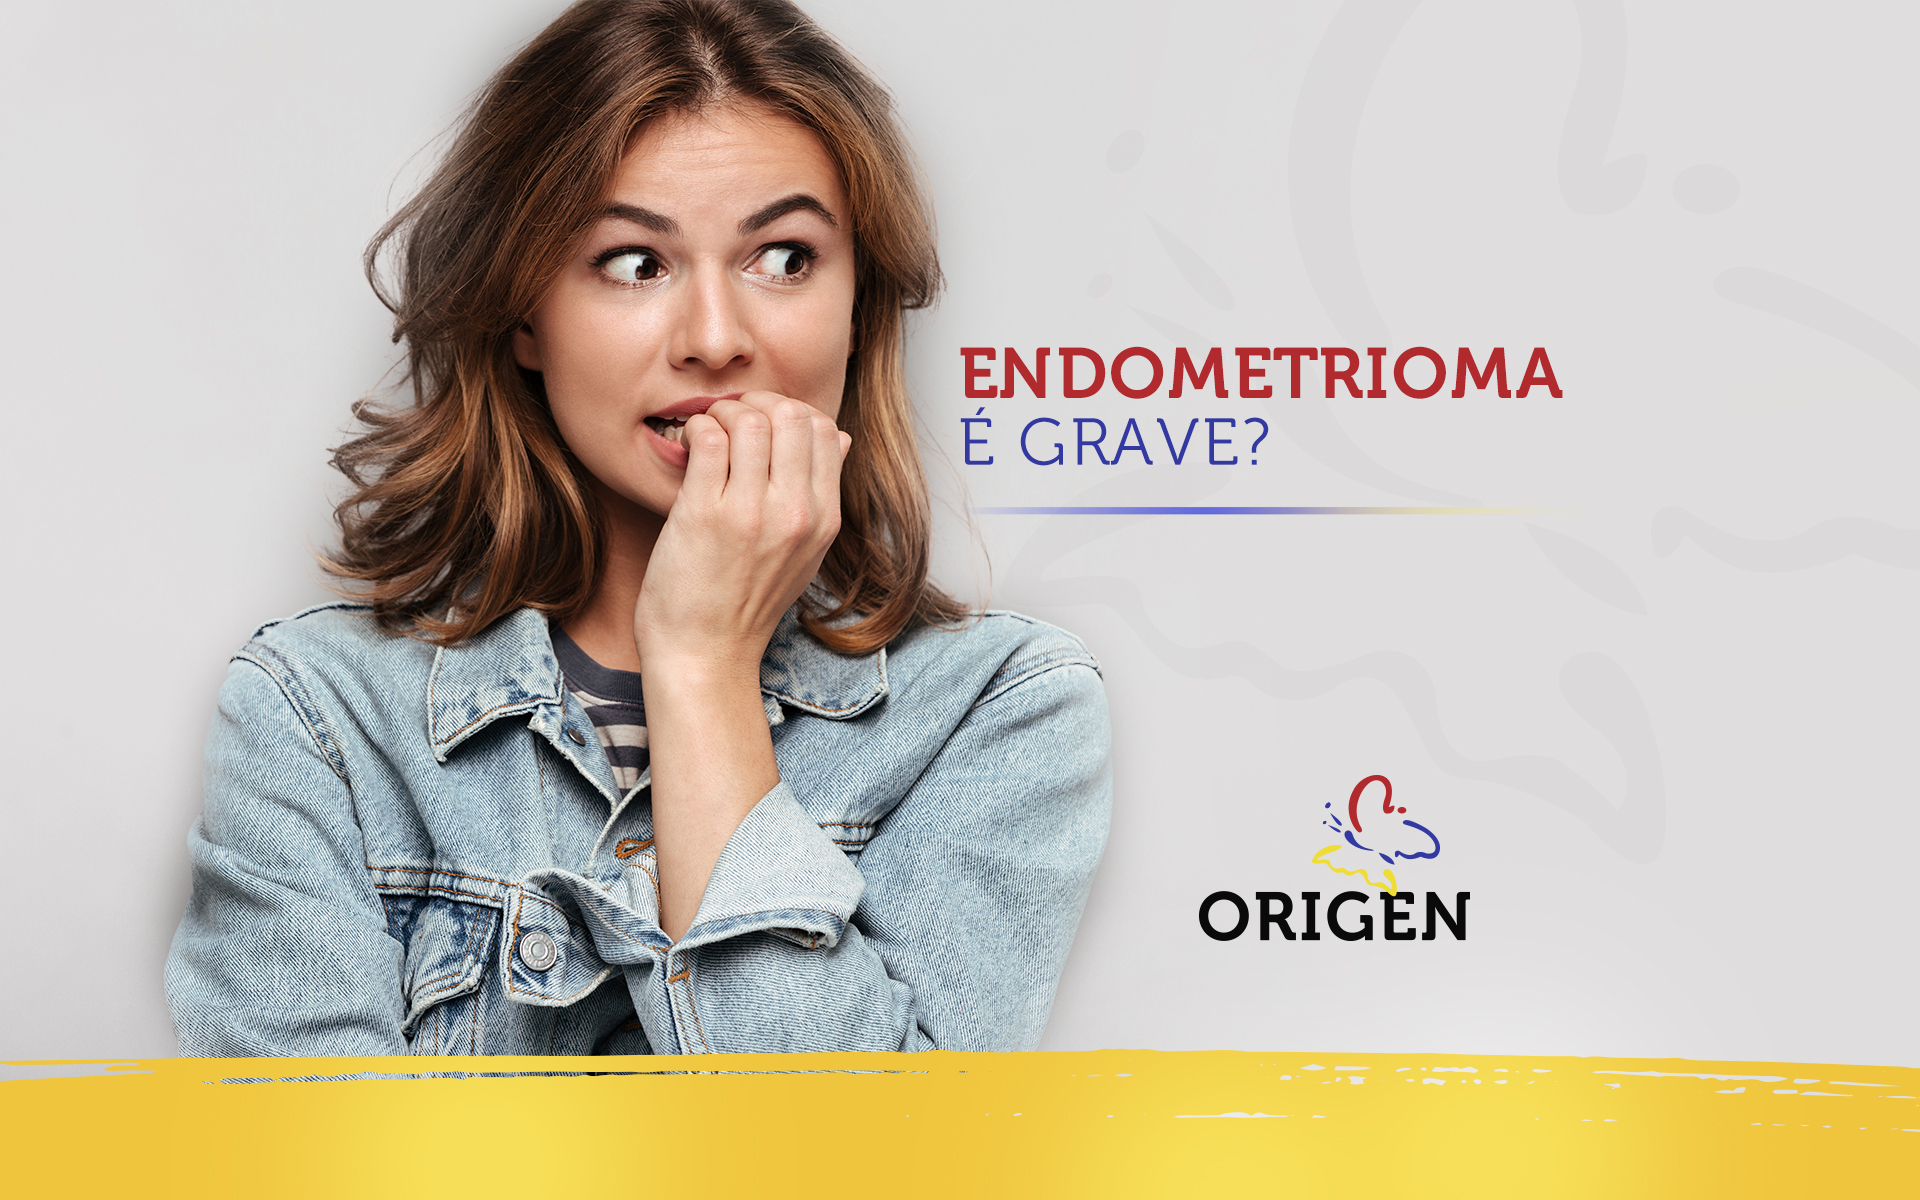 Endometrioma é grave?